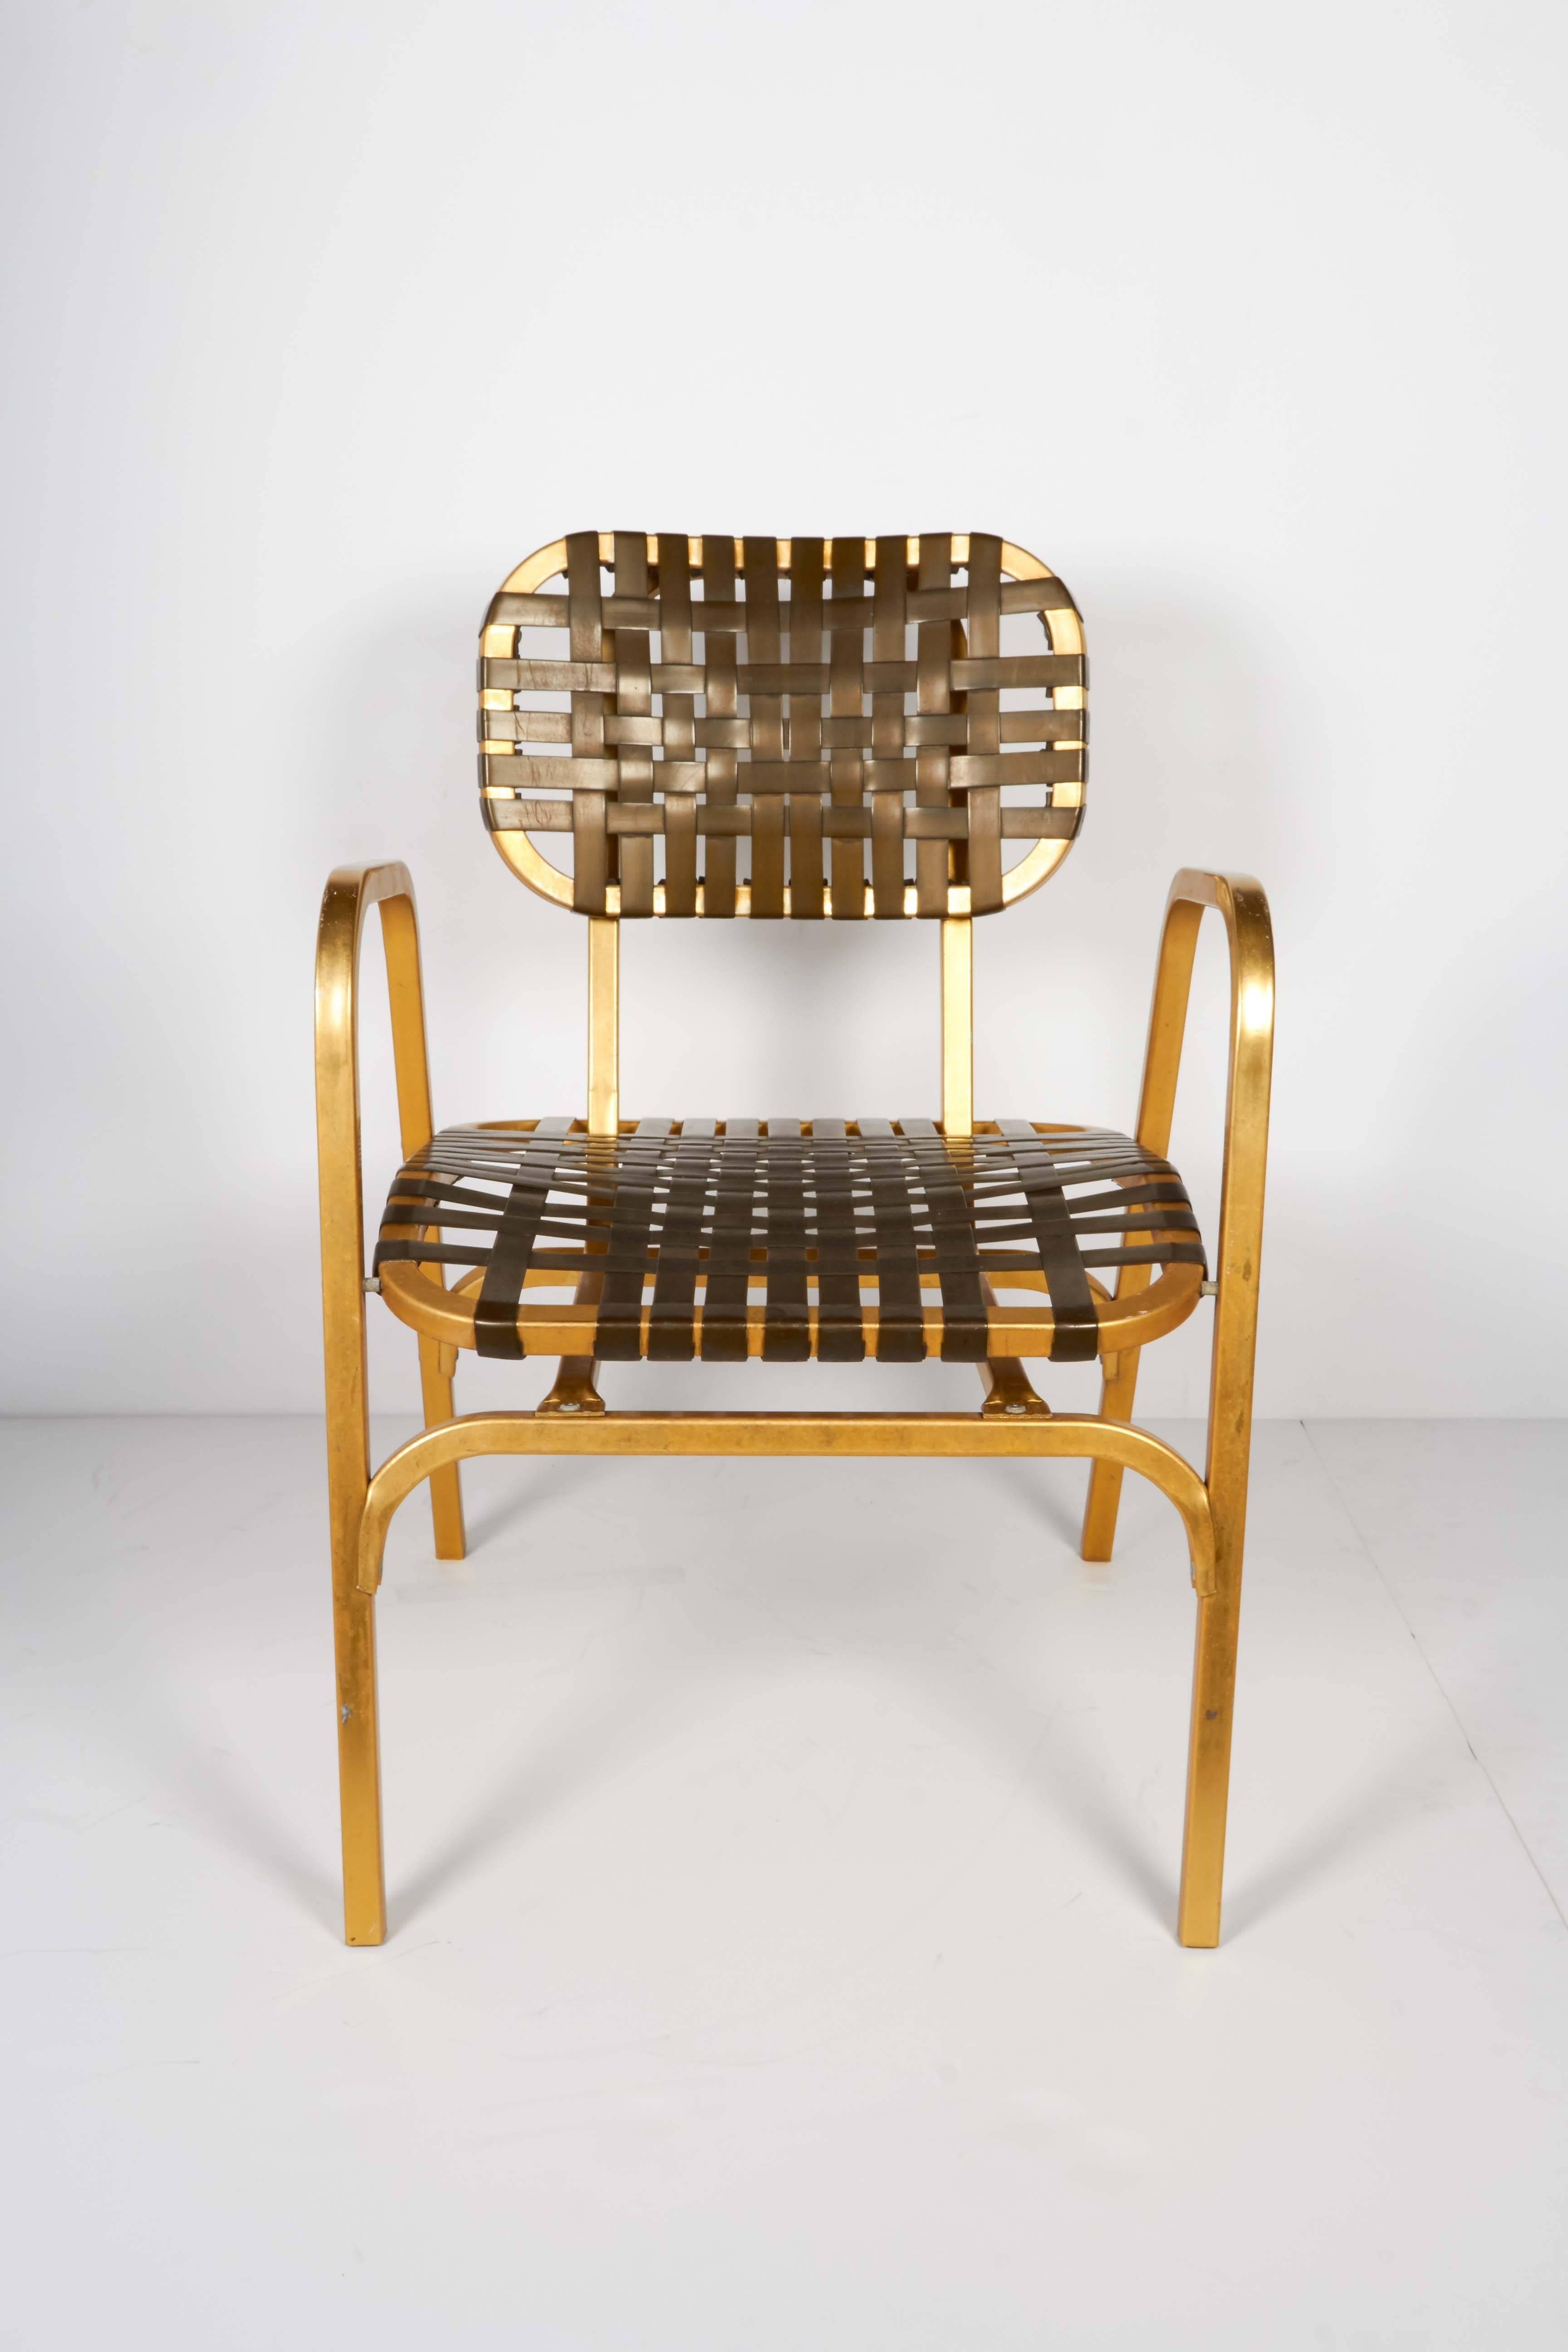 Bronzed Pair of 1950's Mid-Century Modern Leisure Garden or Patio Chairs